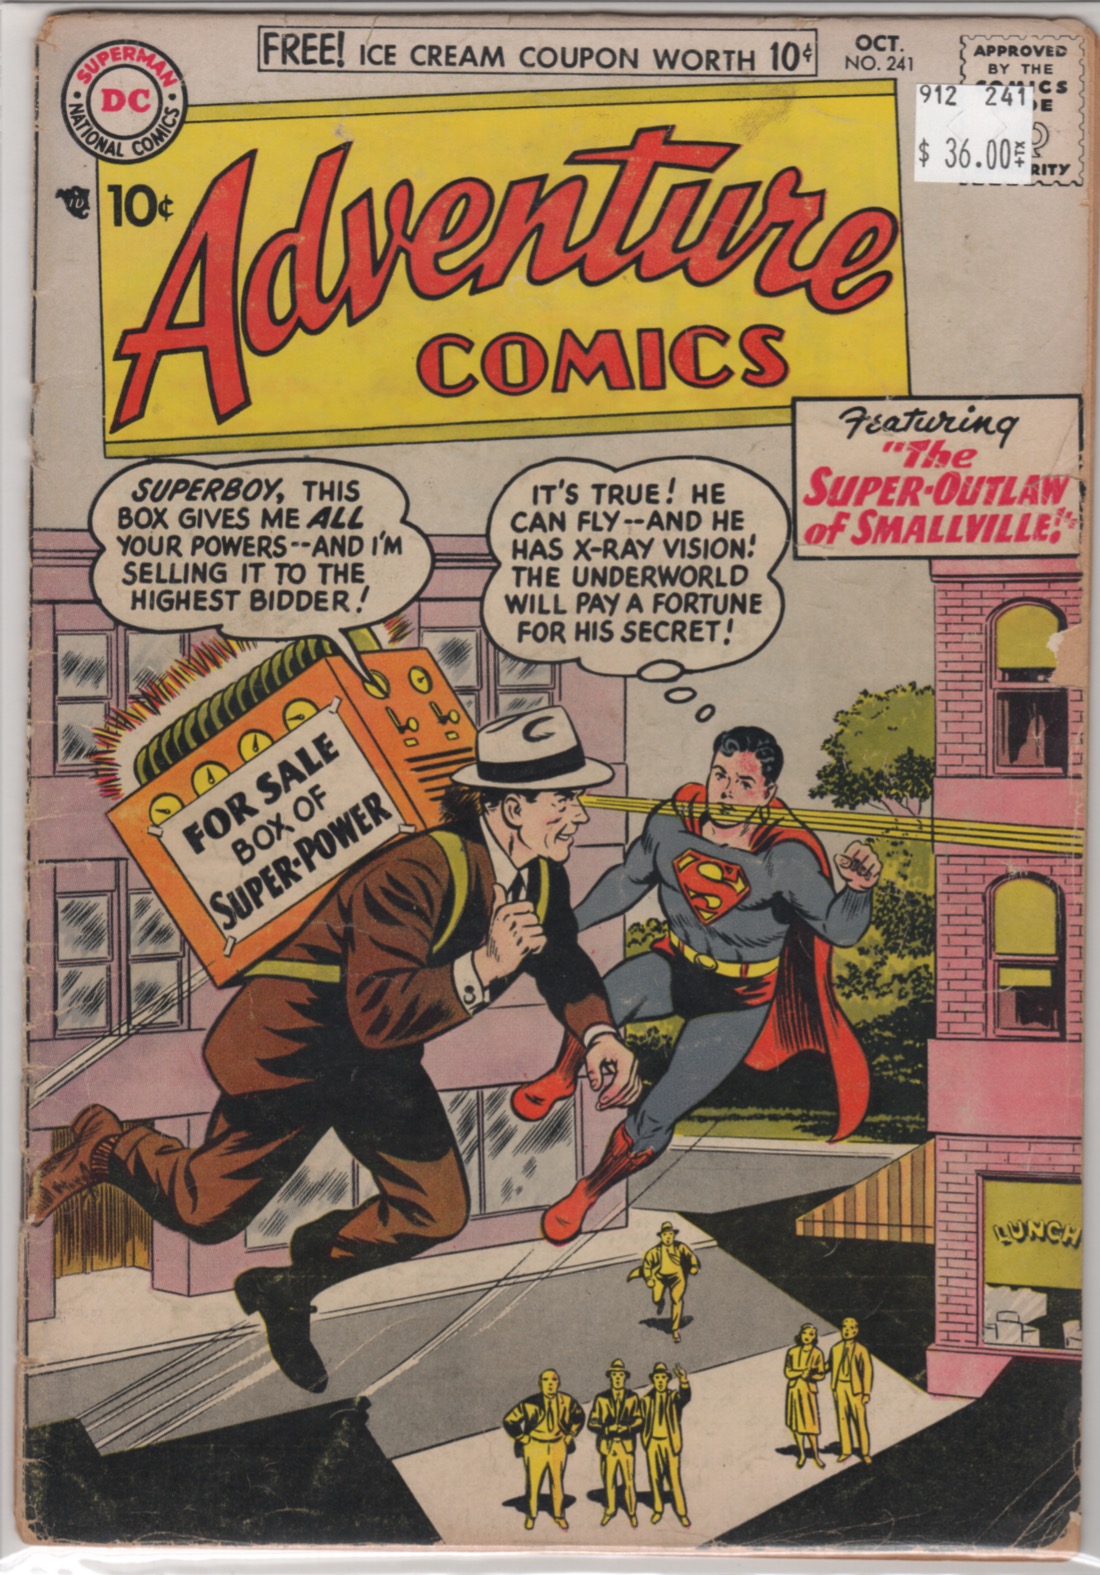 Adventure Comics #241